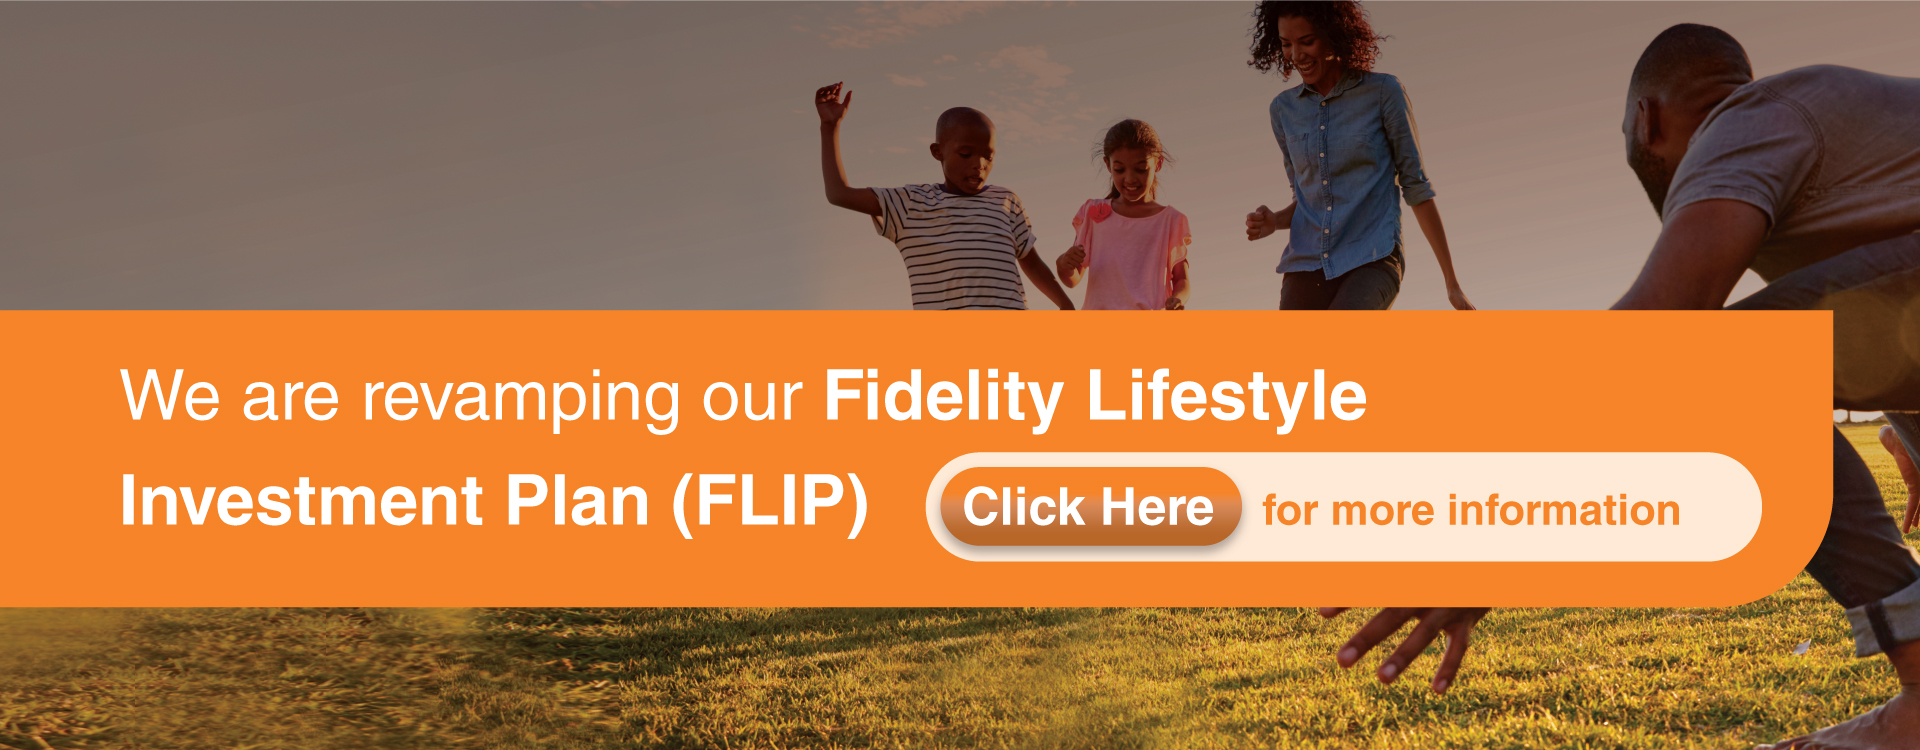 Fidelity Bank Ghana Company Profile: Valuation, Funding & Investors